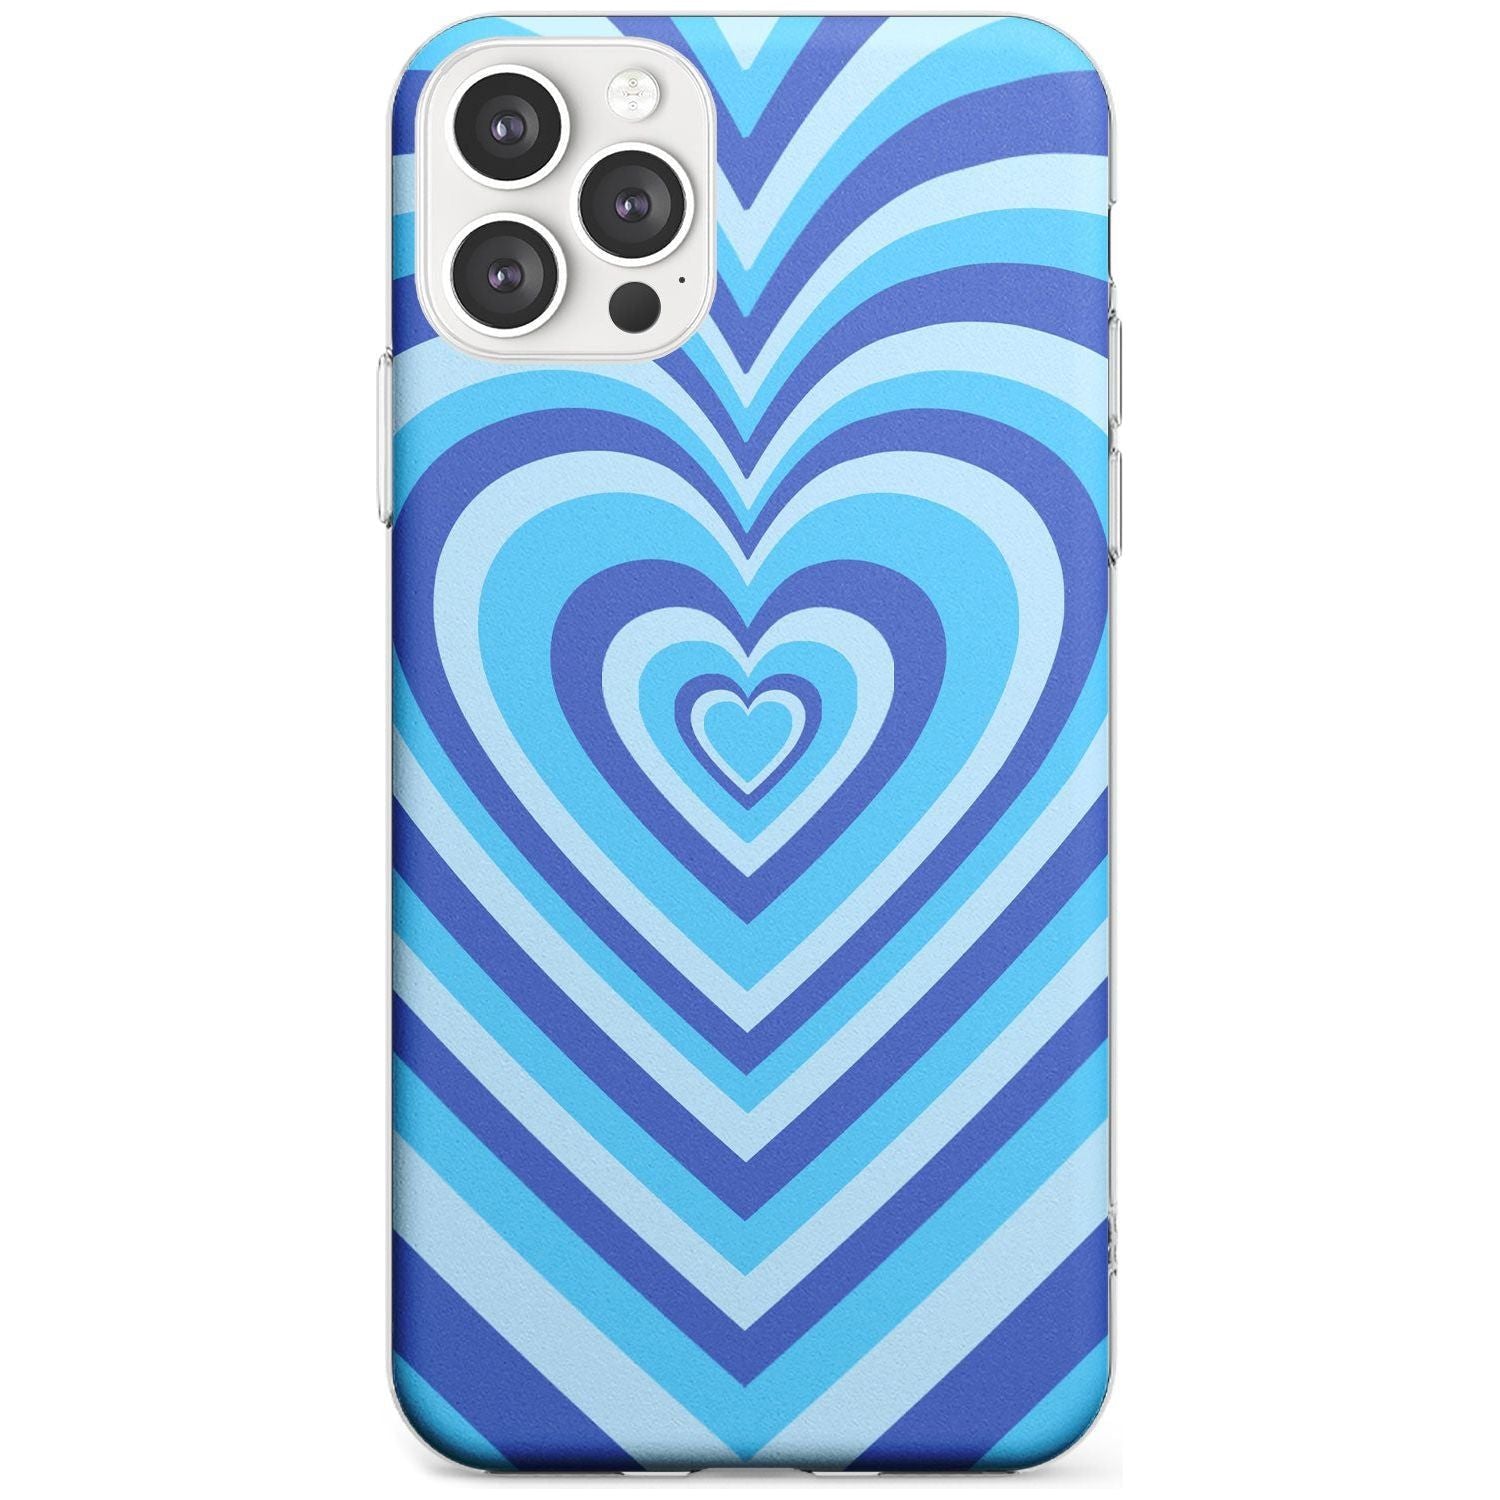 Blue Heart Illusion Slim TPU Phone Case for iPhone 11 Pro Max